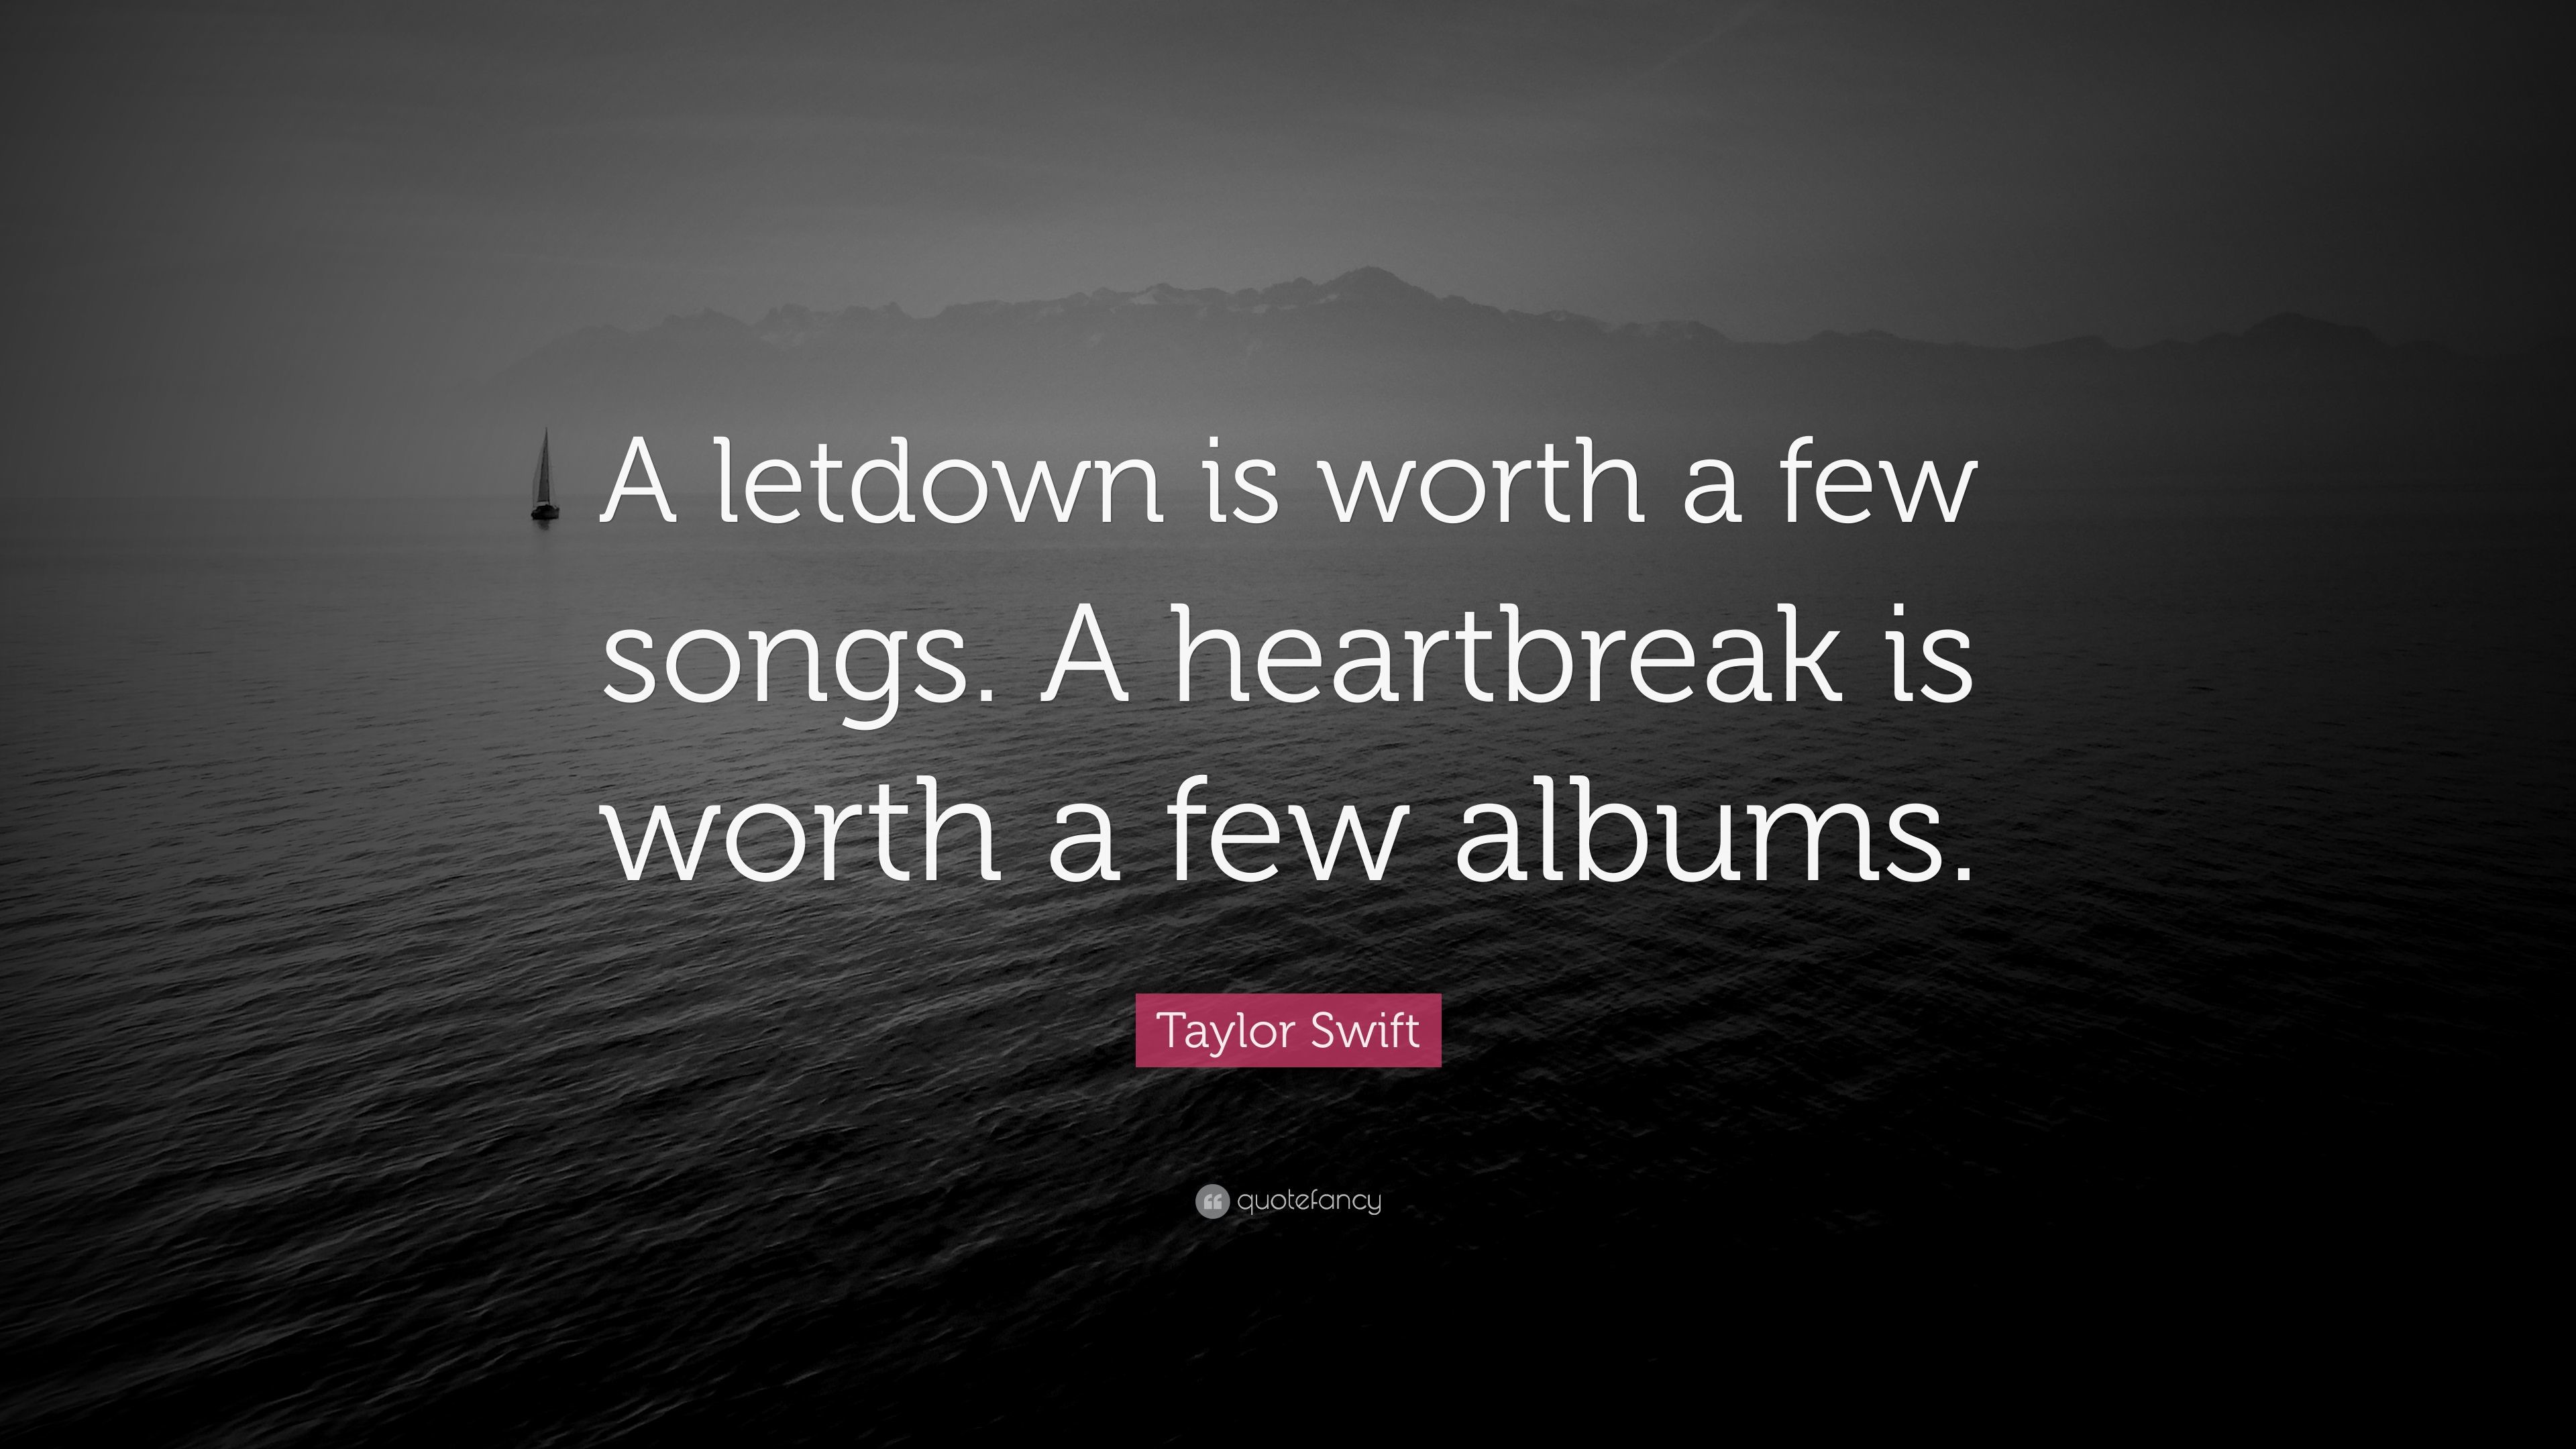 3840x2160 Taylor Swift Quote: “A letdown is worth a few songs. A heartbreak is